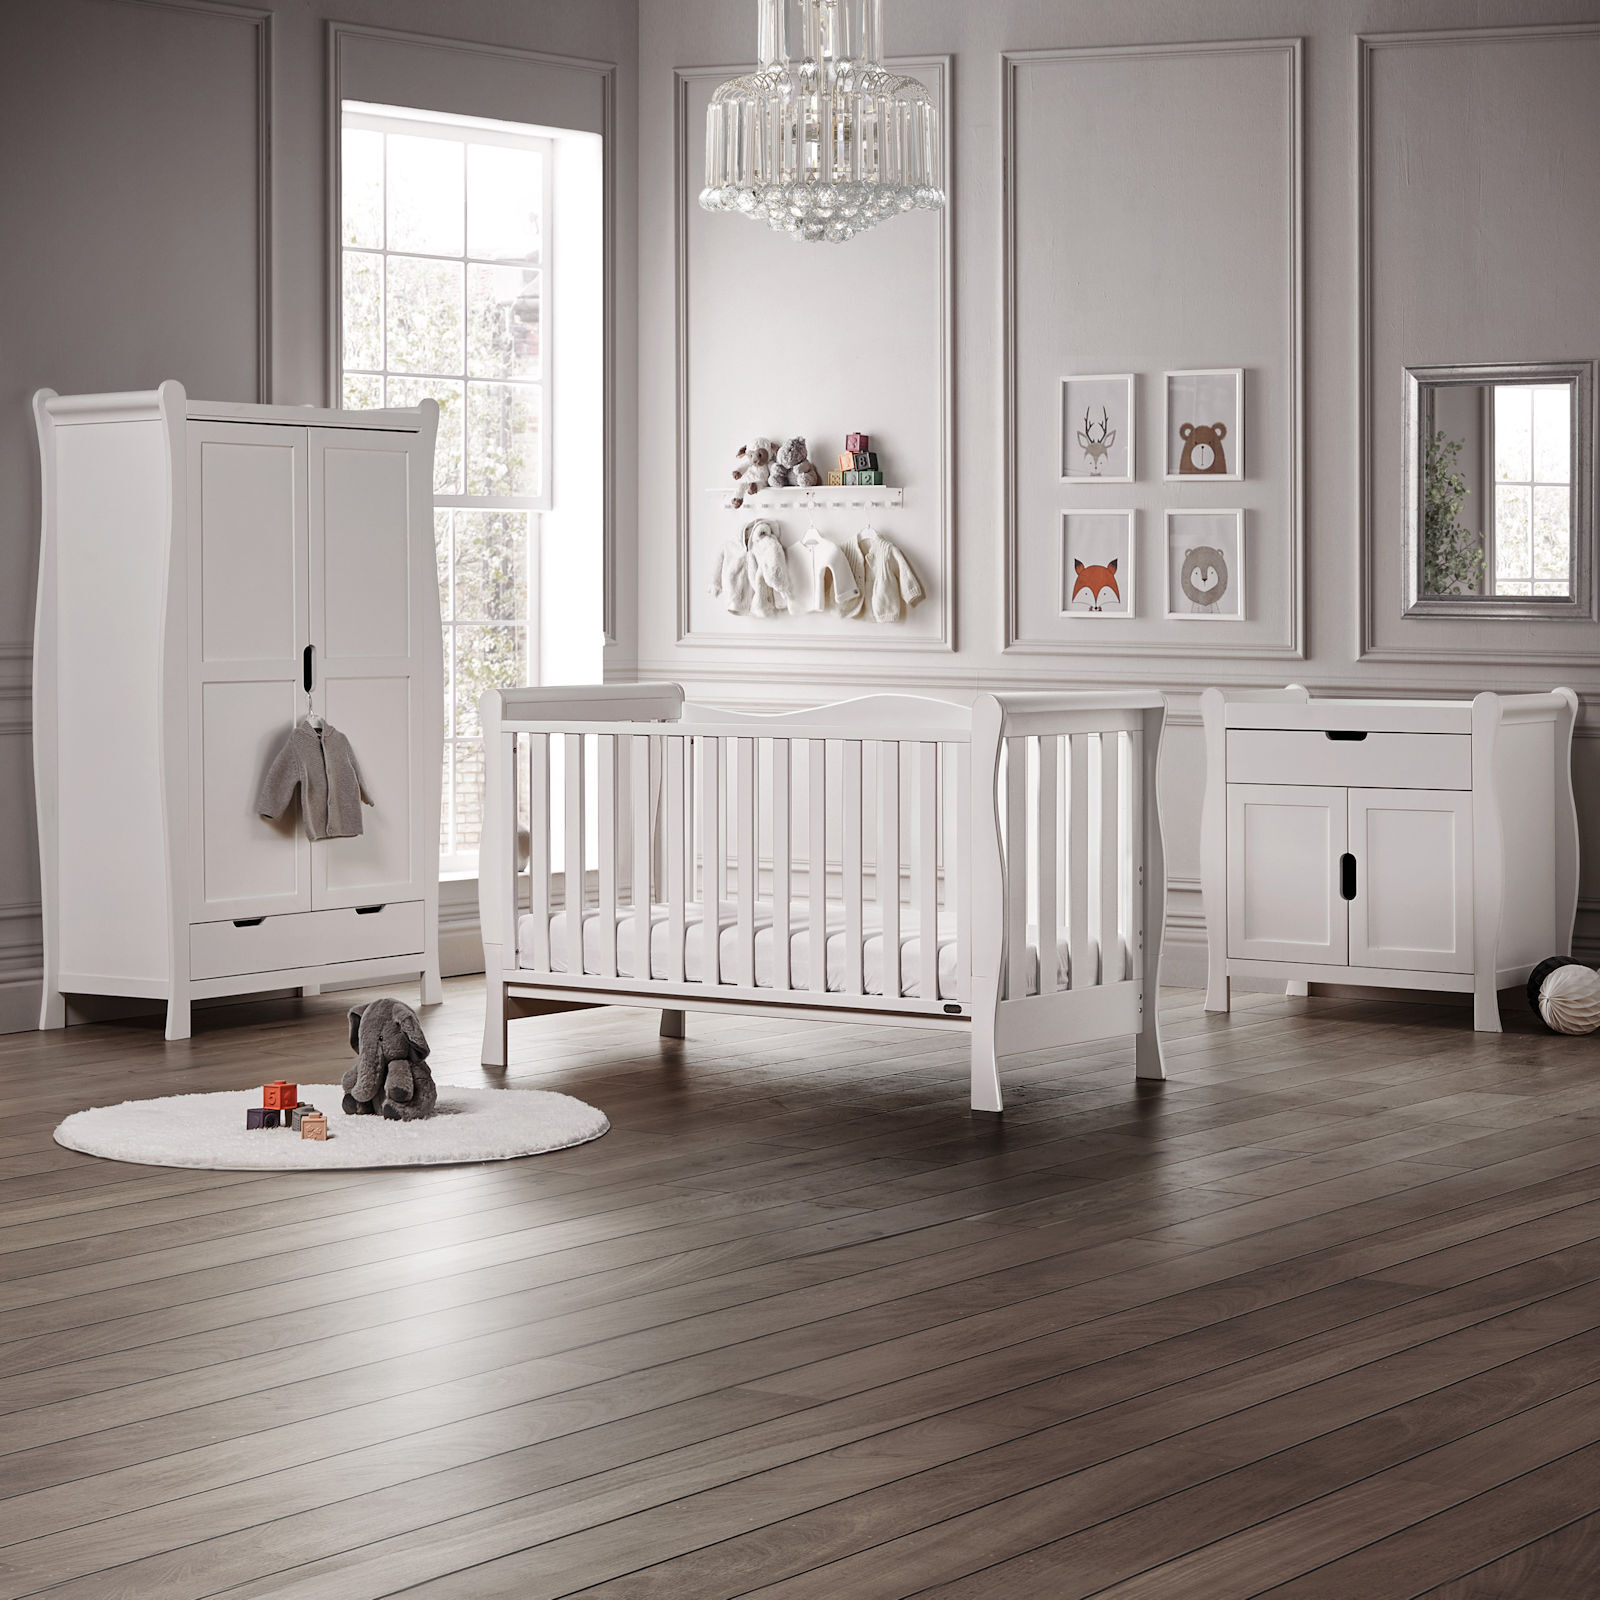 Puggle Prestbury Slatted Luxe Deluxe Sleigh 6pc Nursery Furniture Set with Fibre Mattress - White